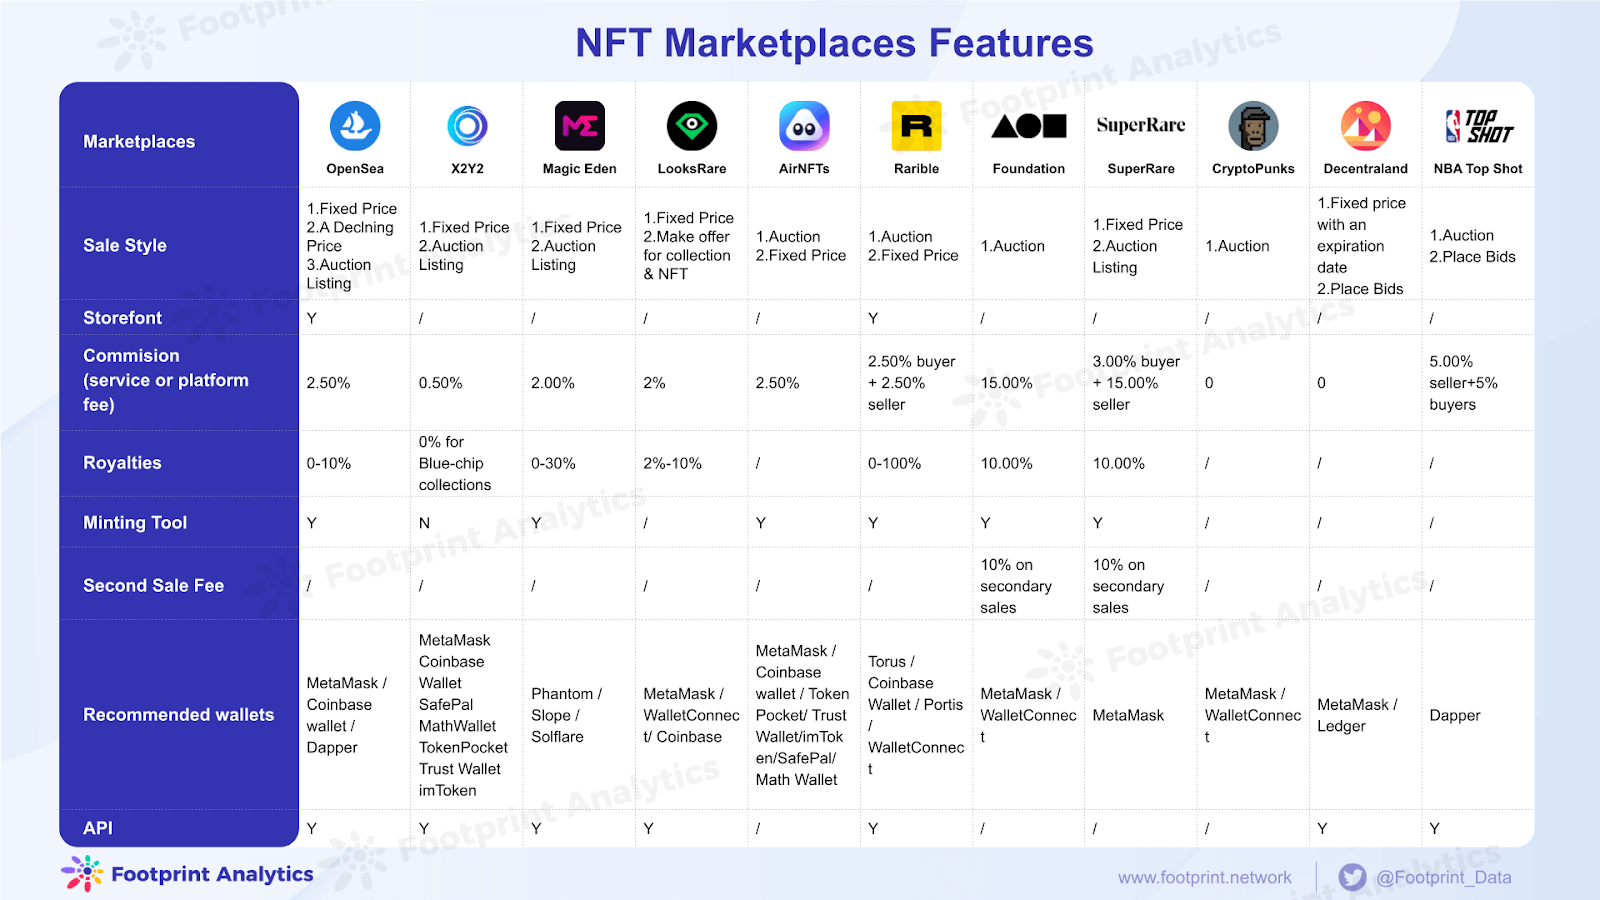 Footprint Analytics - NFT Marketplace Features